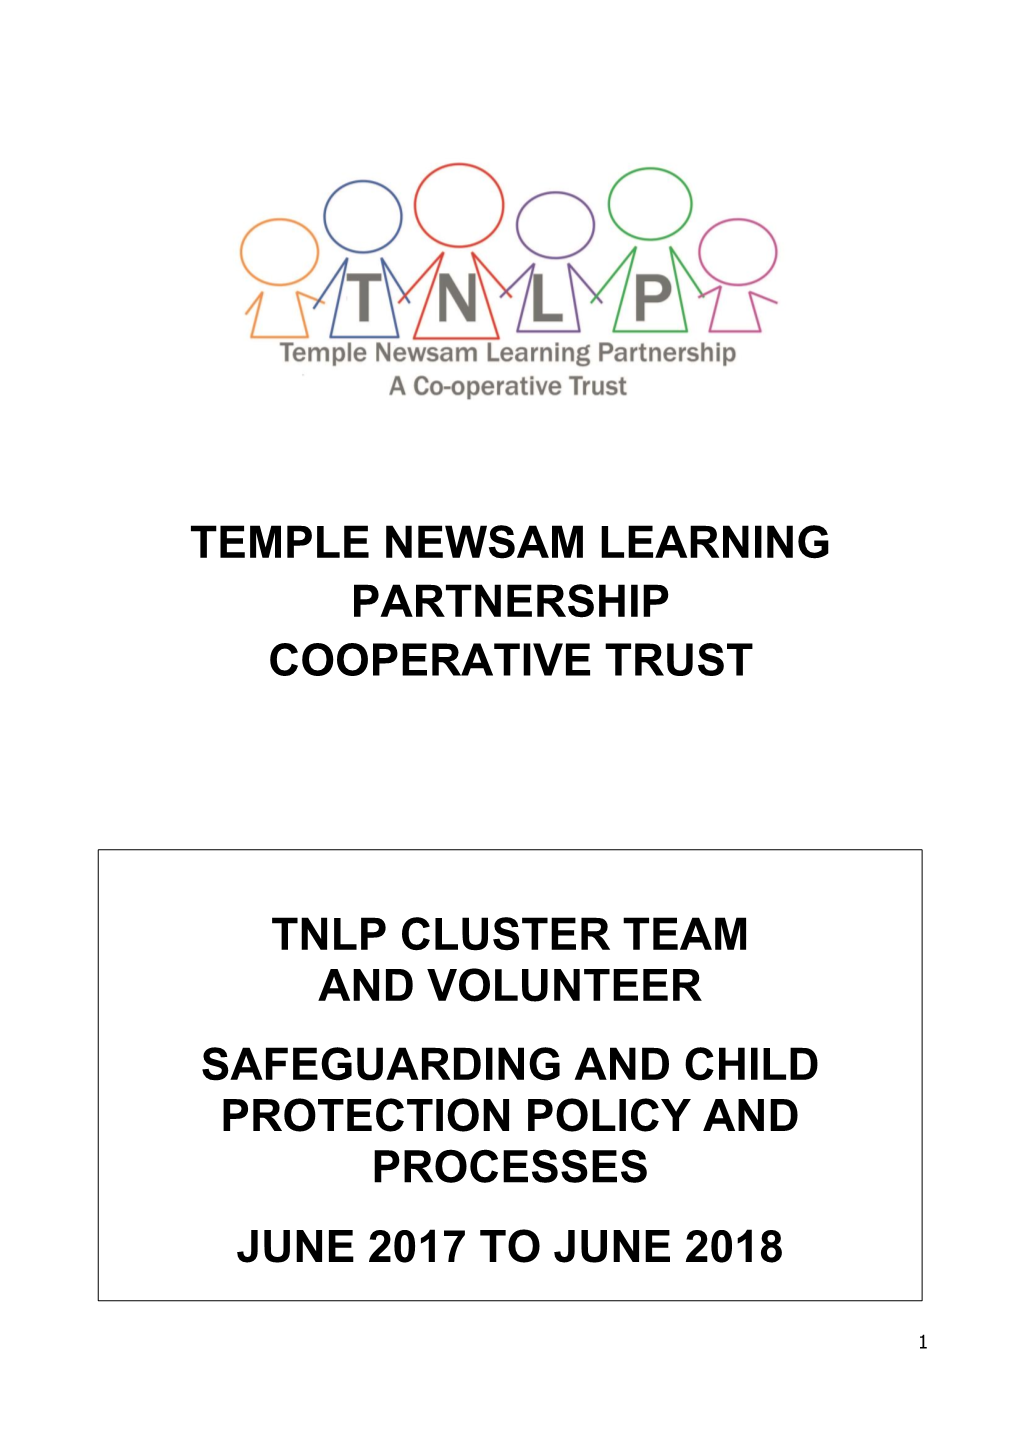 Temple Newsam Learning Partnership Cooperative Trust